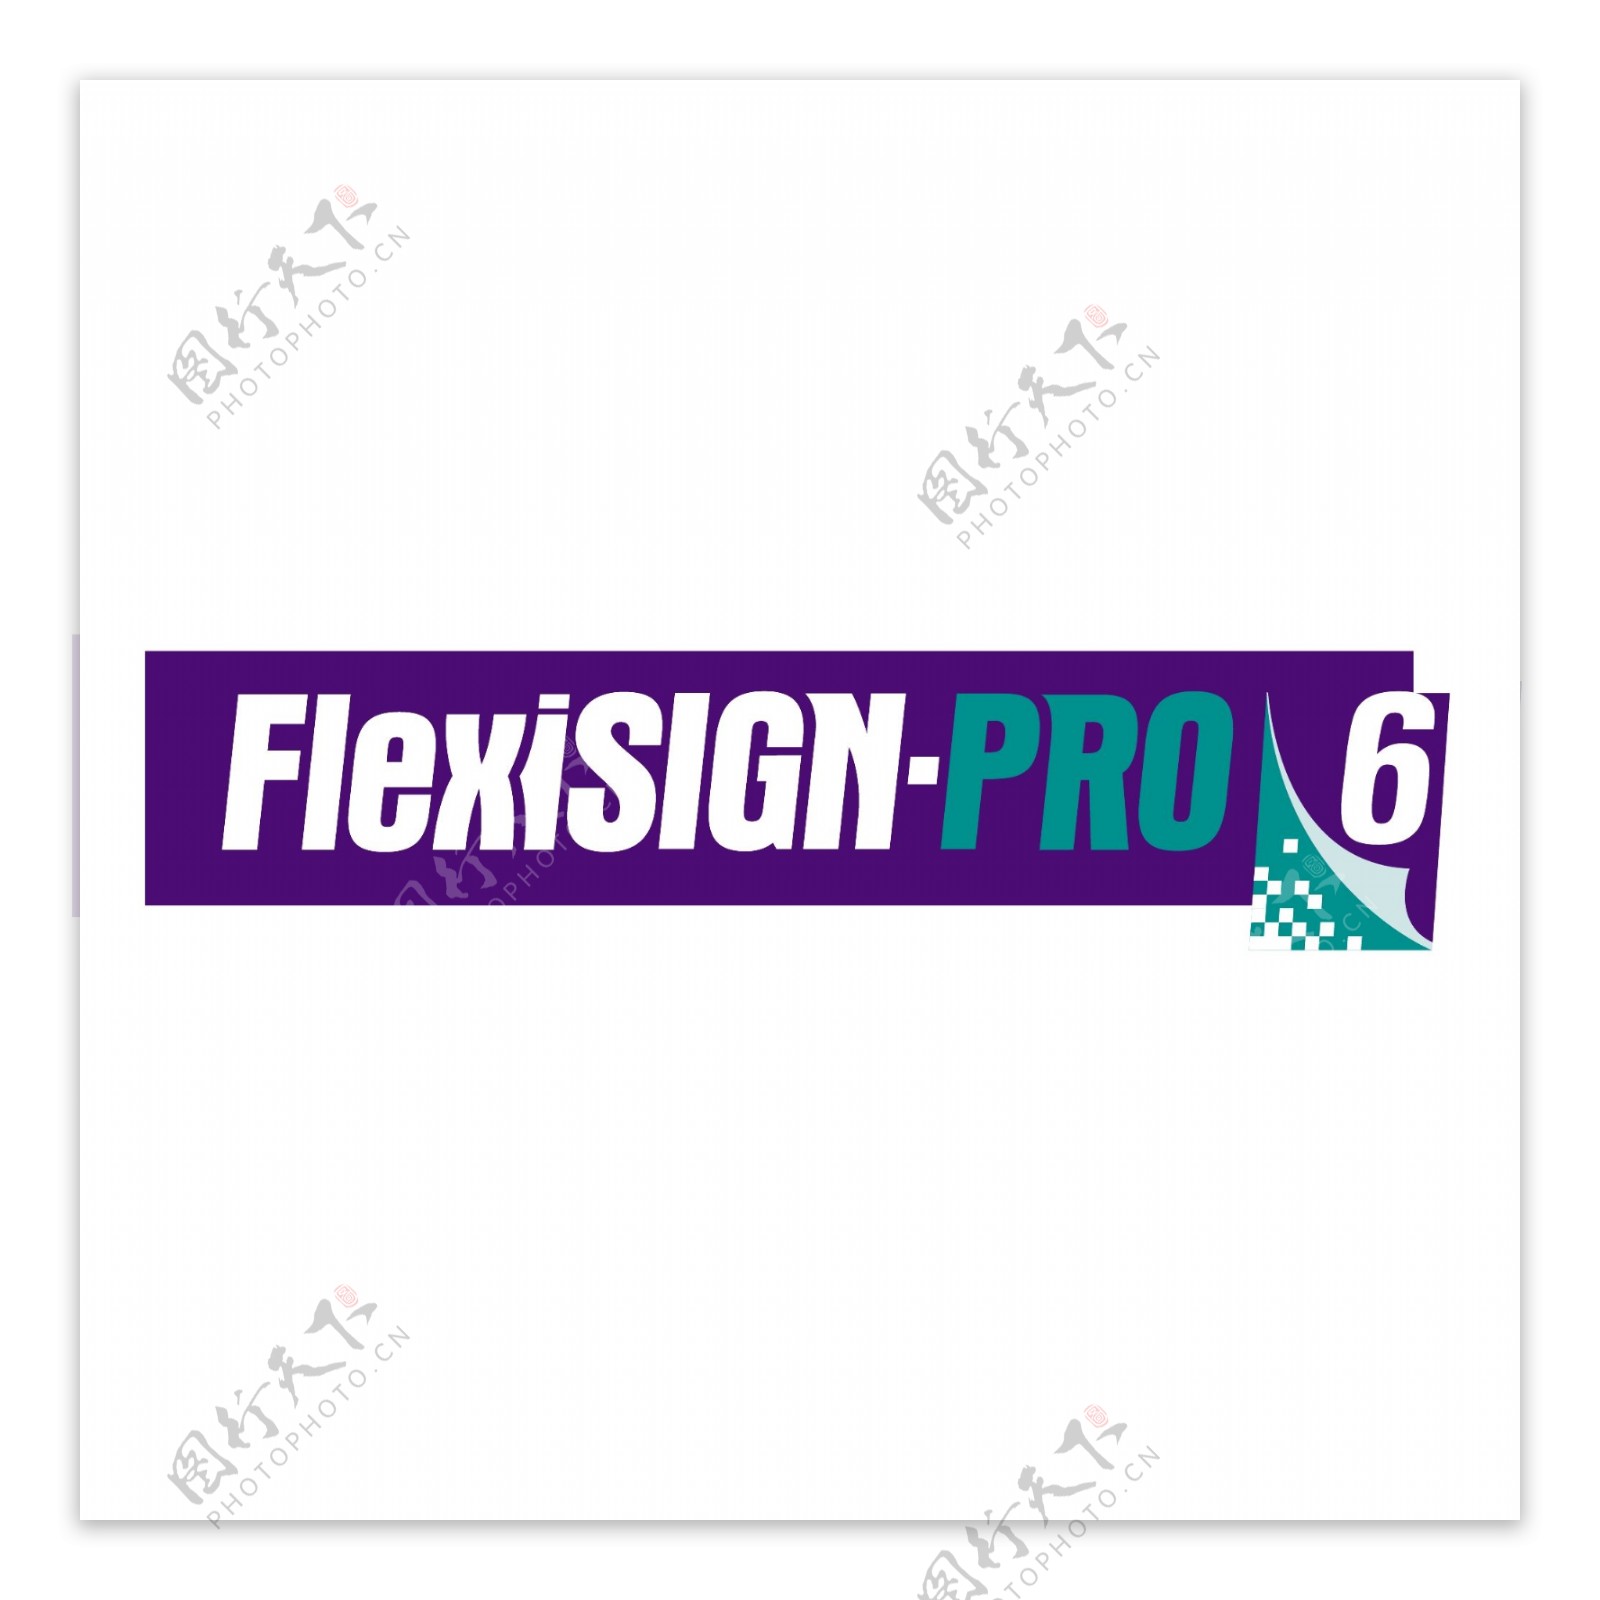 flexisignPro6